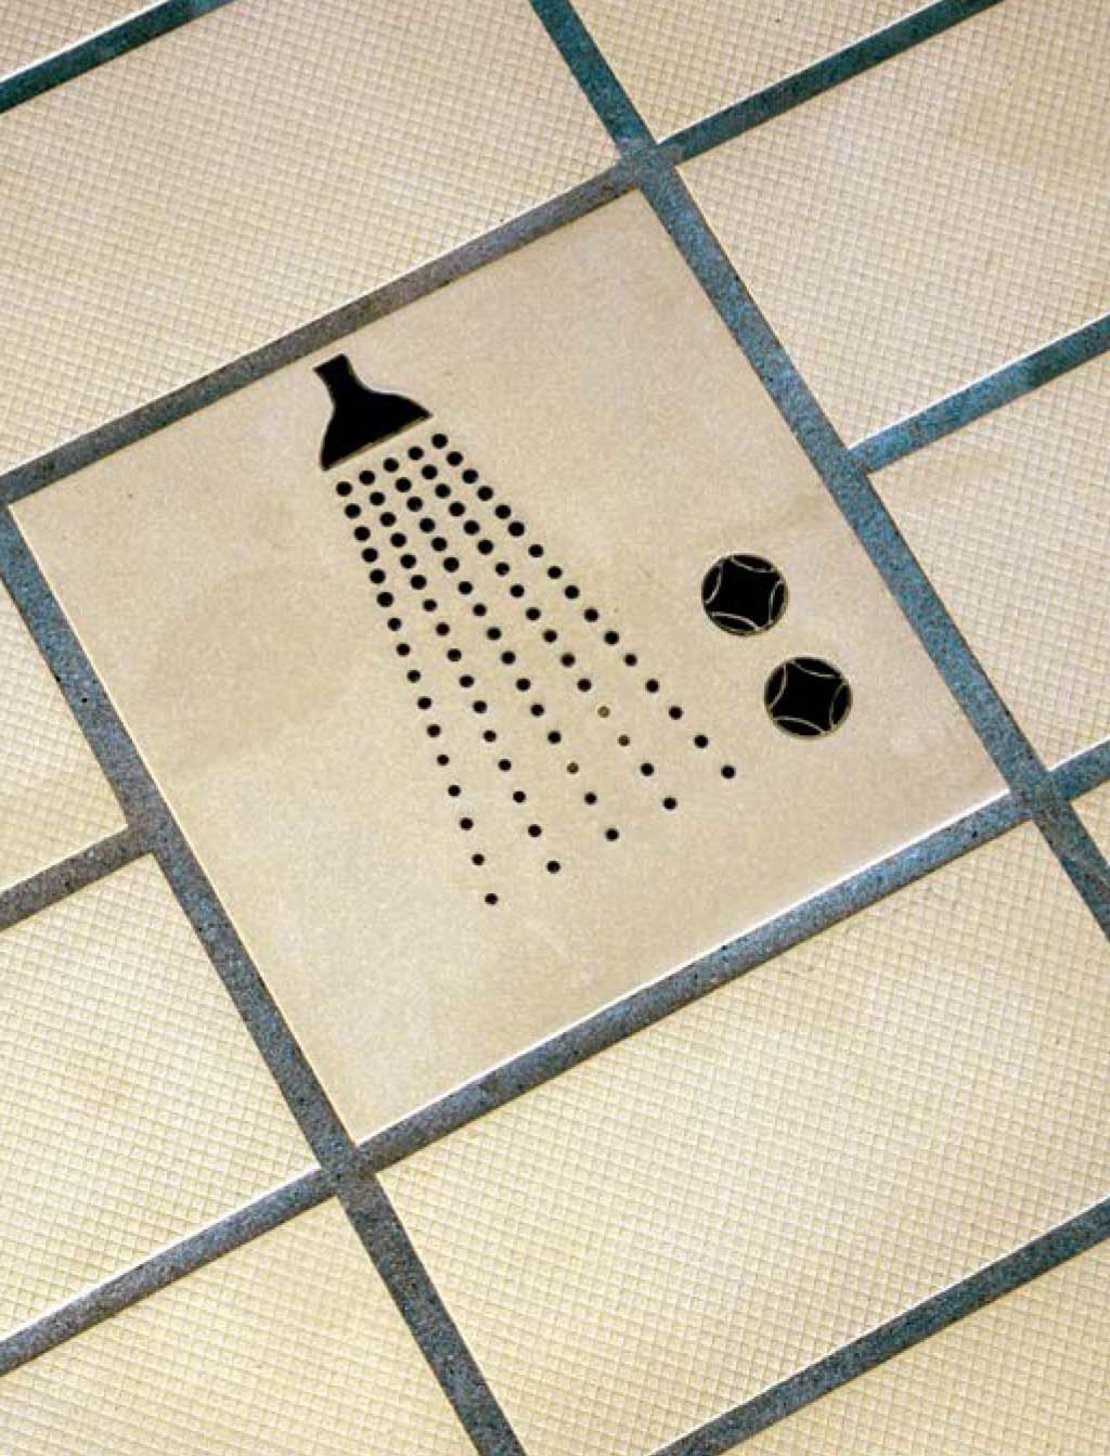 Gail anti-slip tiles for the swimming pool